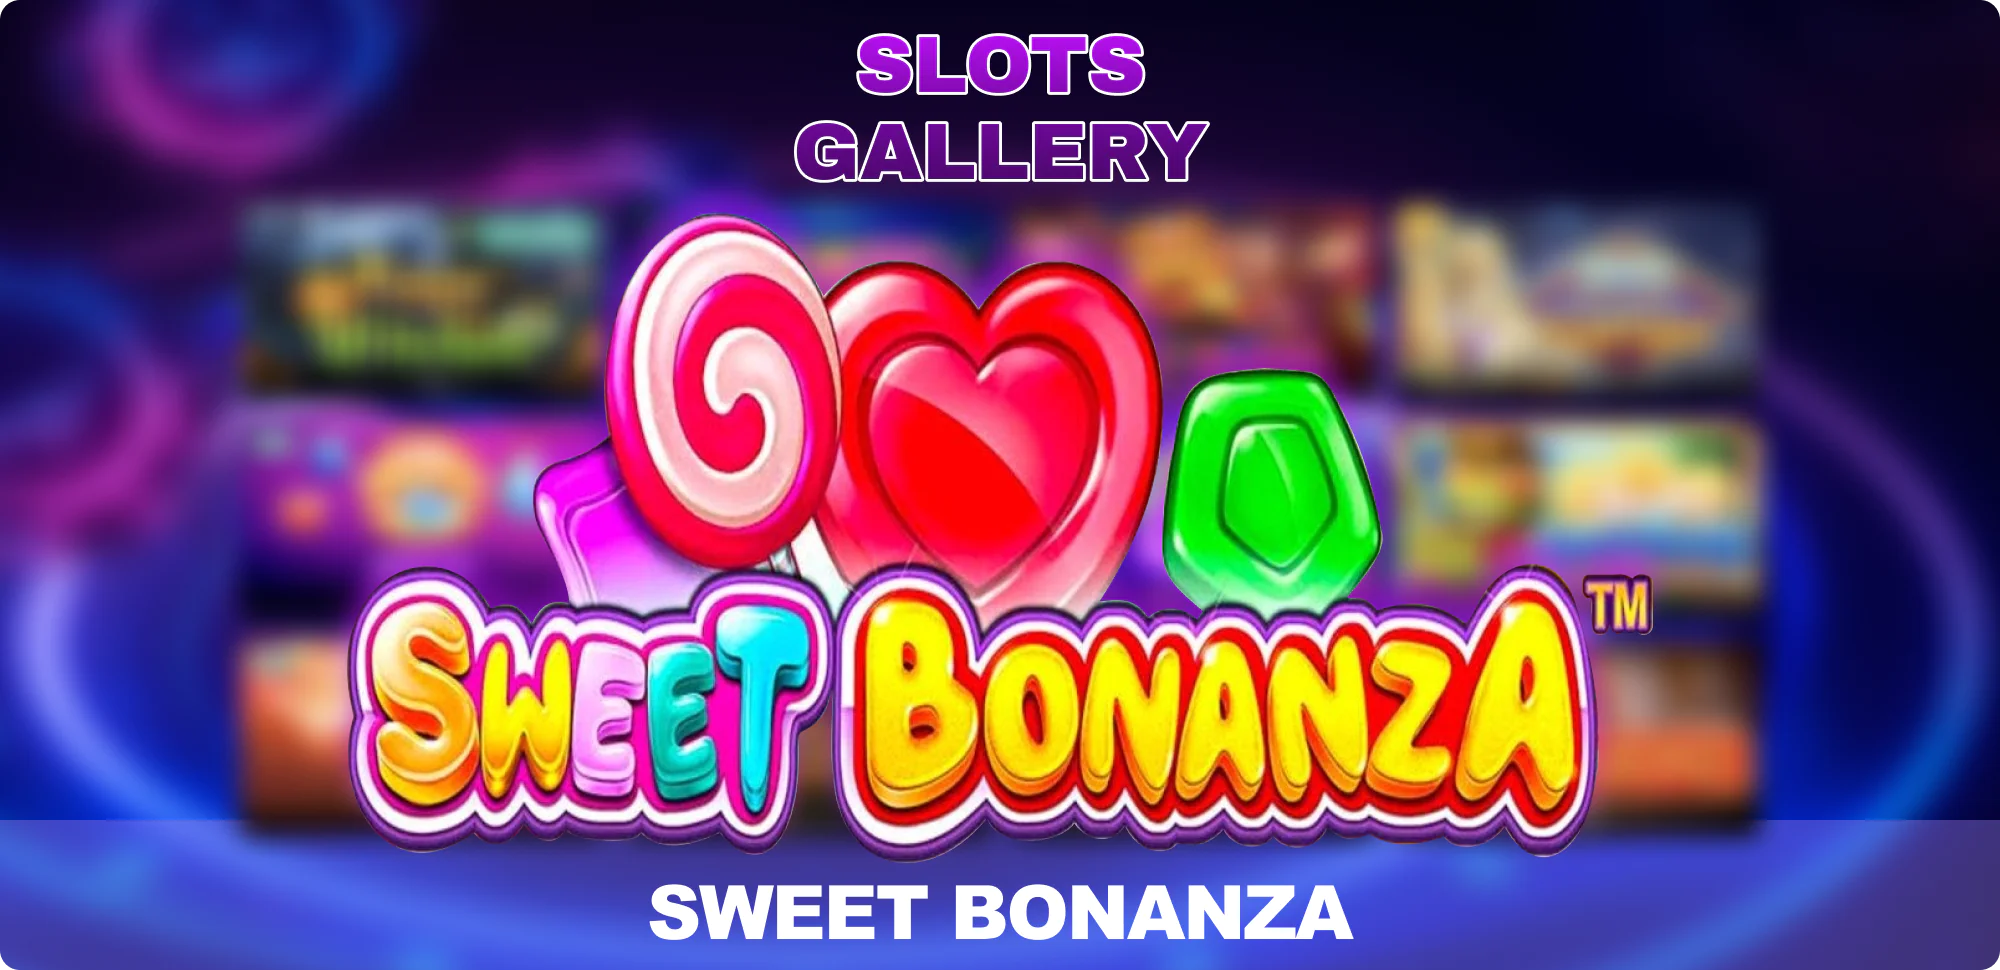 Sweet Bonanza - Slots Gallery Casino